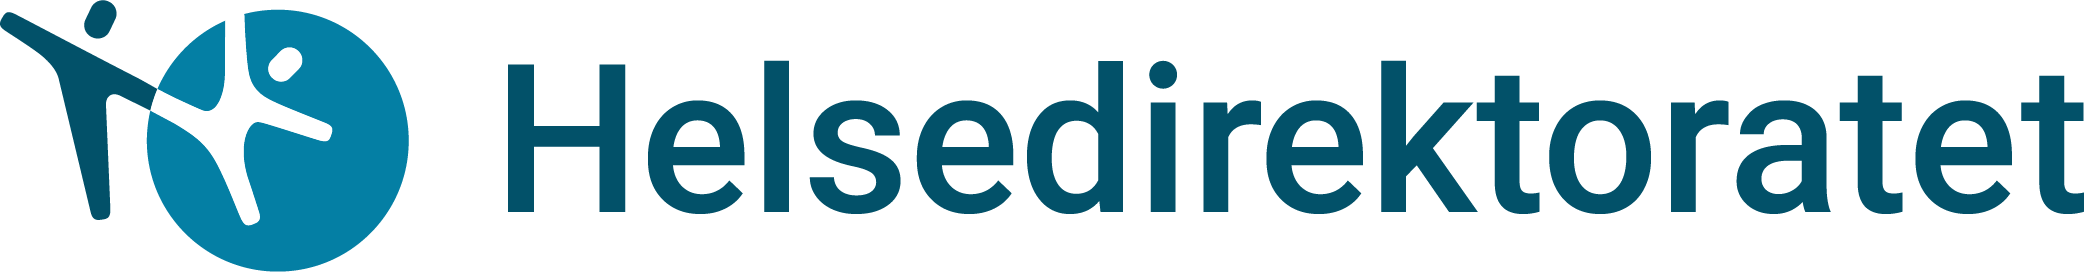 Hdir logo